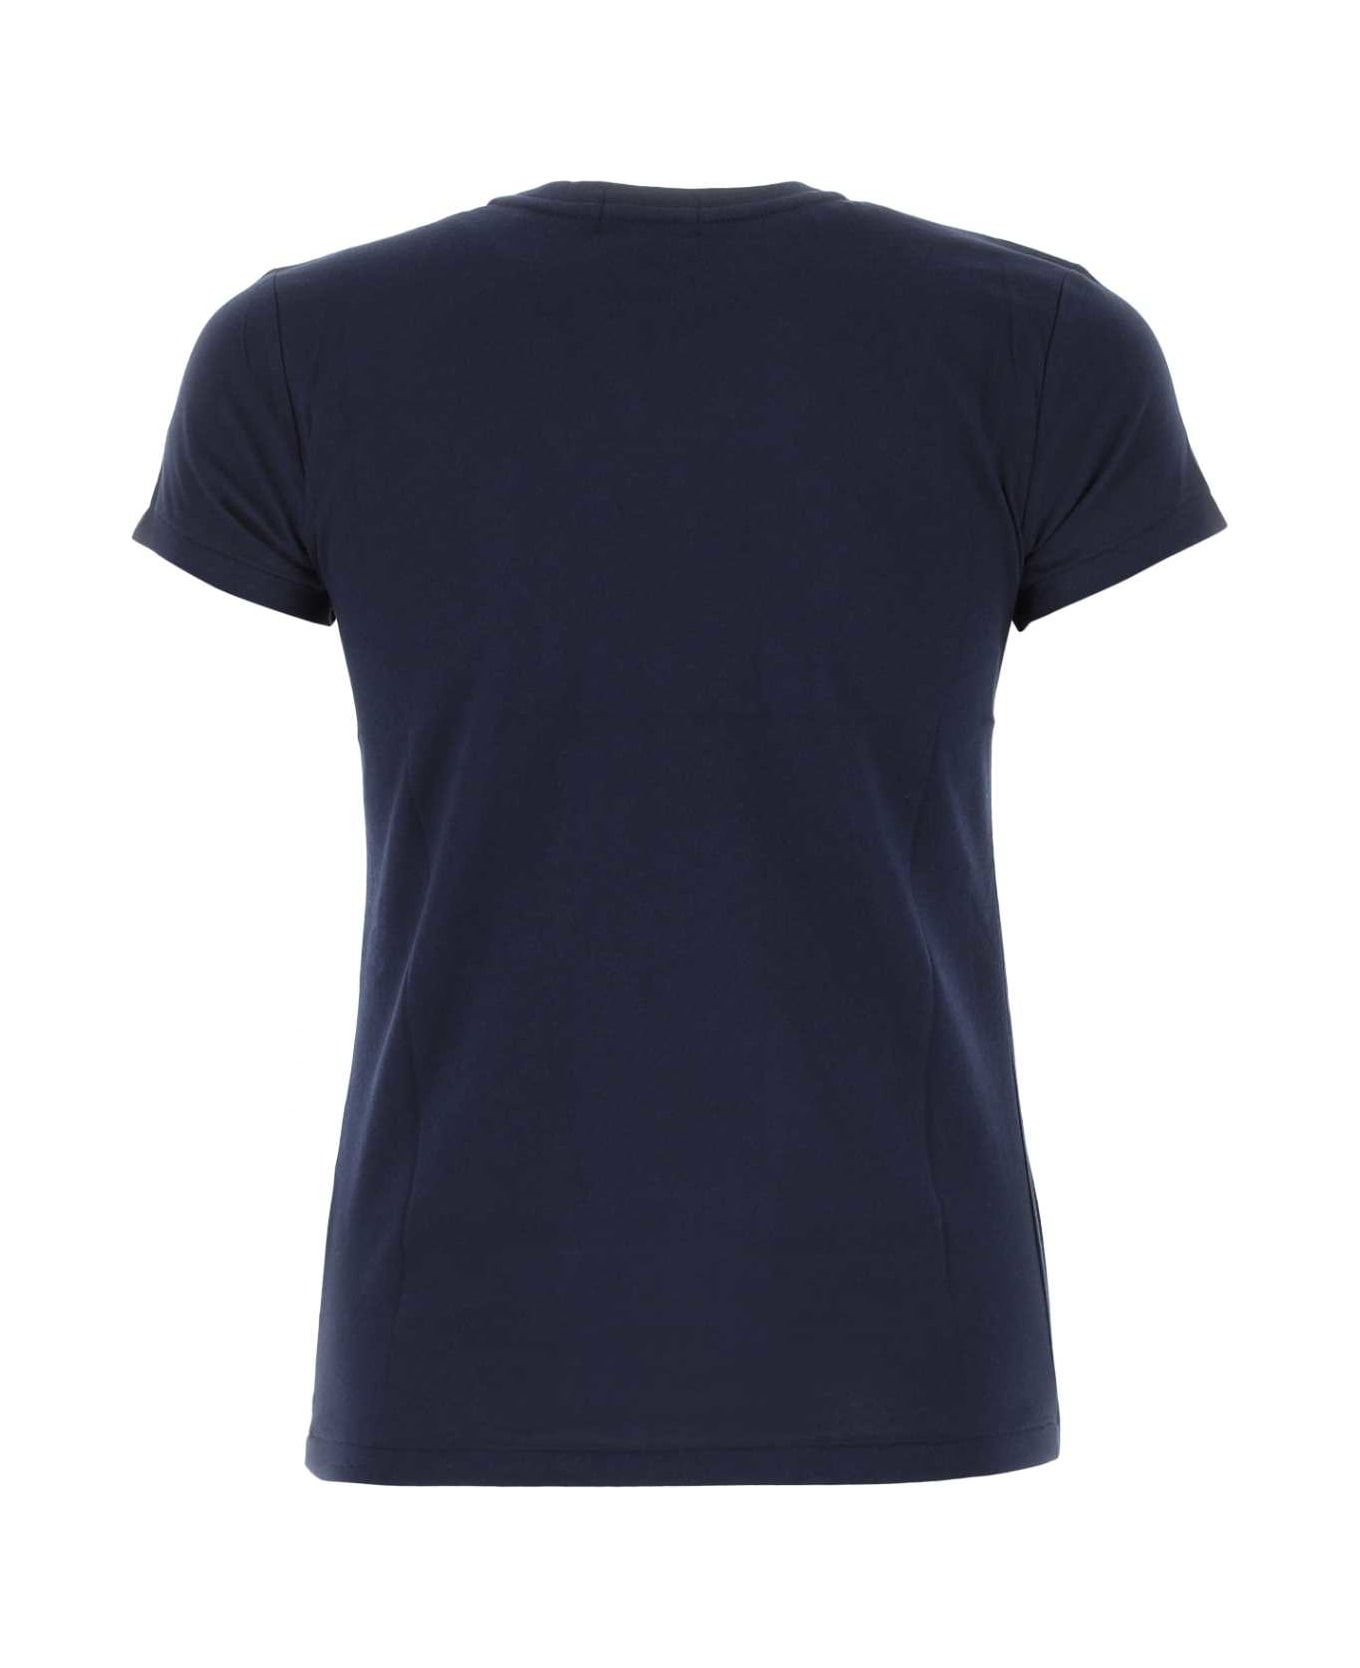 Polo Ralph Lauren Dark Blue Cotton T-shirt - CRUISENAVY